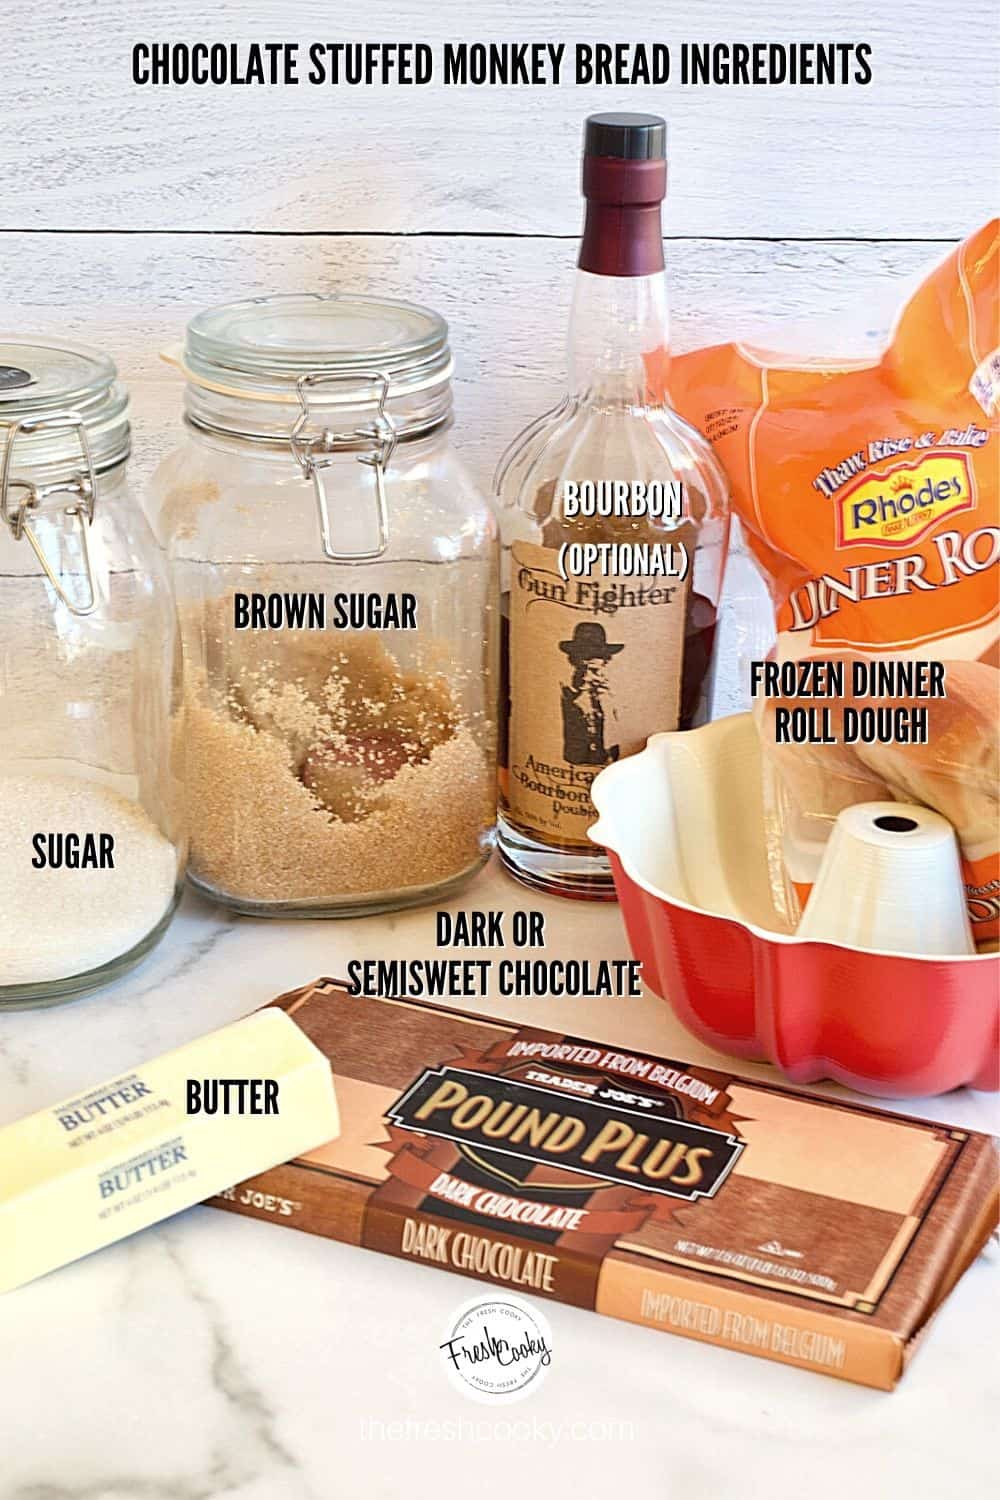 Ingredients for Chocolate Monkey Bread. L-R regular sugar, brown sugar, bourbon, Rhodes rolls, chocolate, butter.